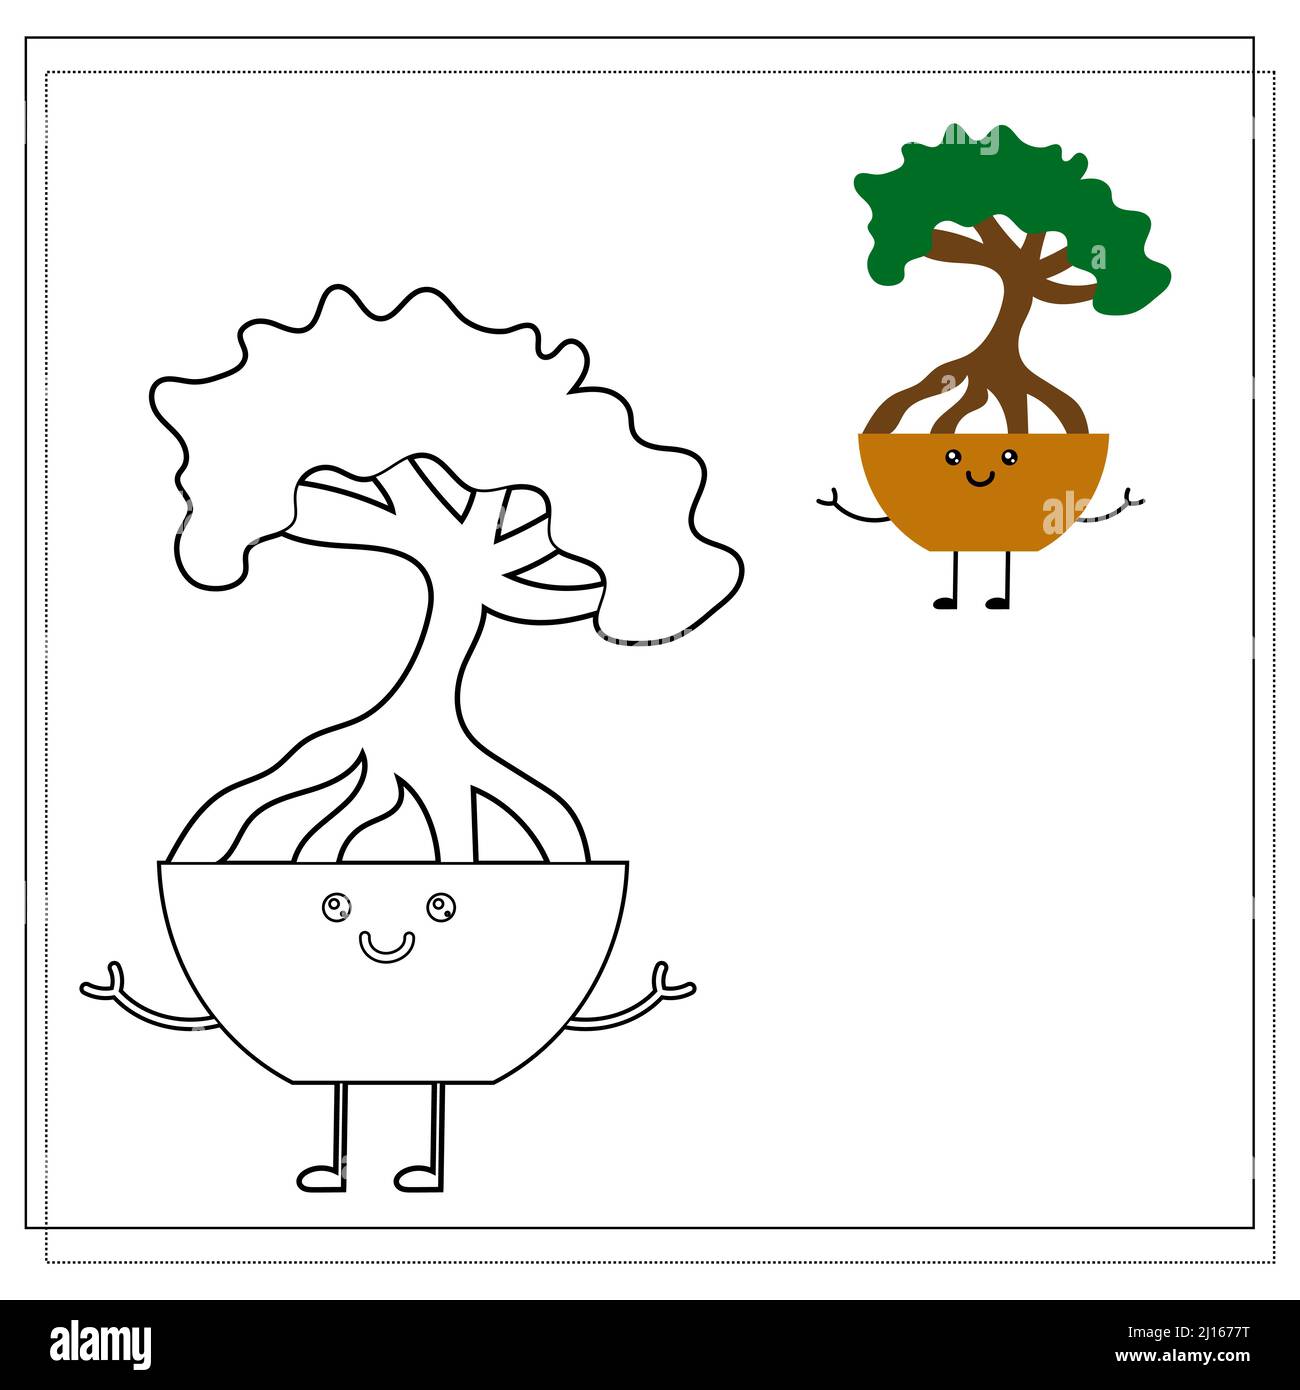 Vriksharopan Drawing Easy | Tree Plantation Drawing | Save Tree Drawing |  Memory Drawing - YouTube